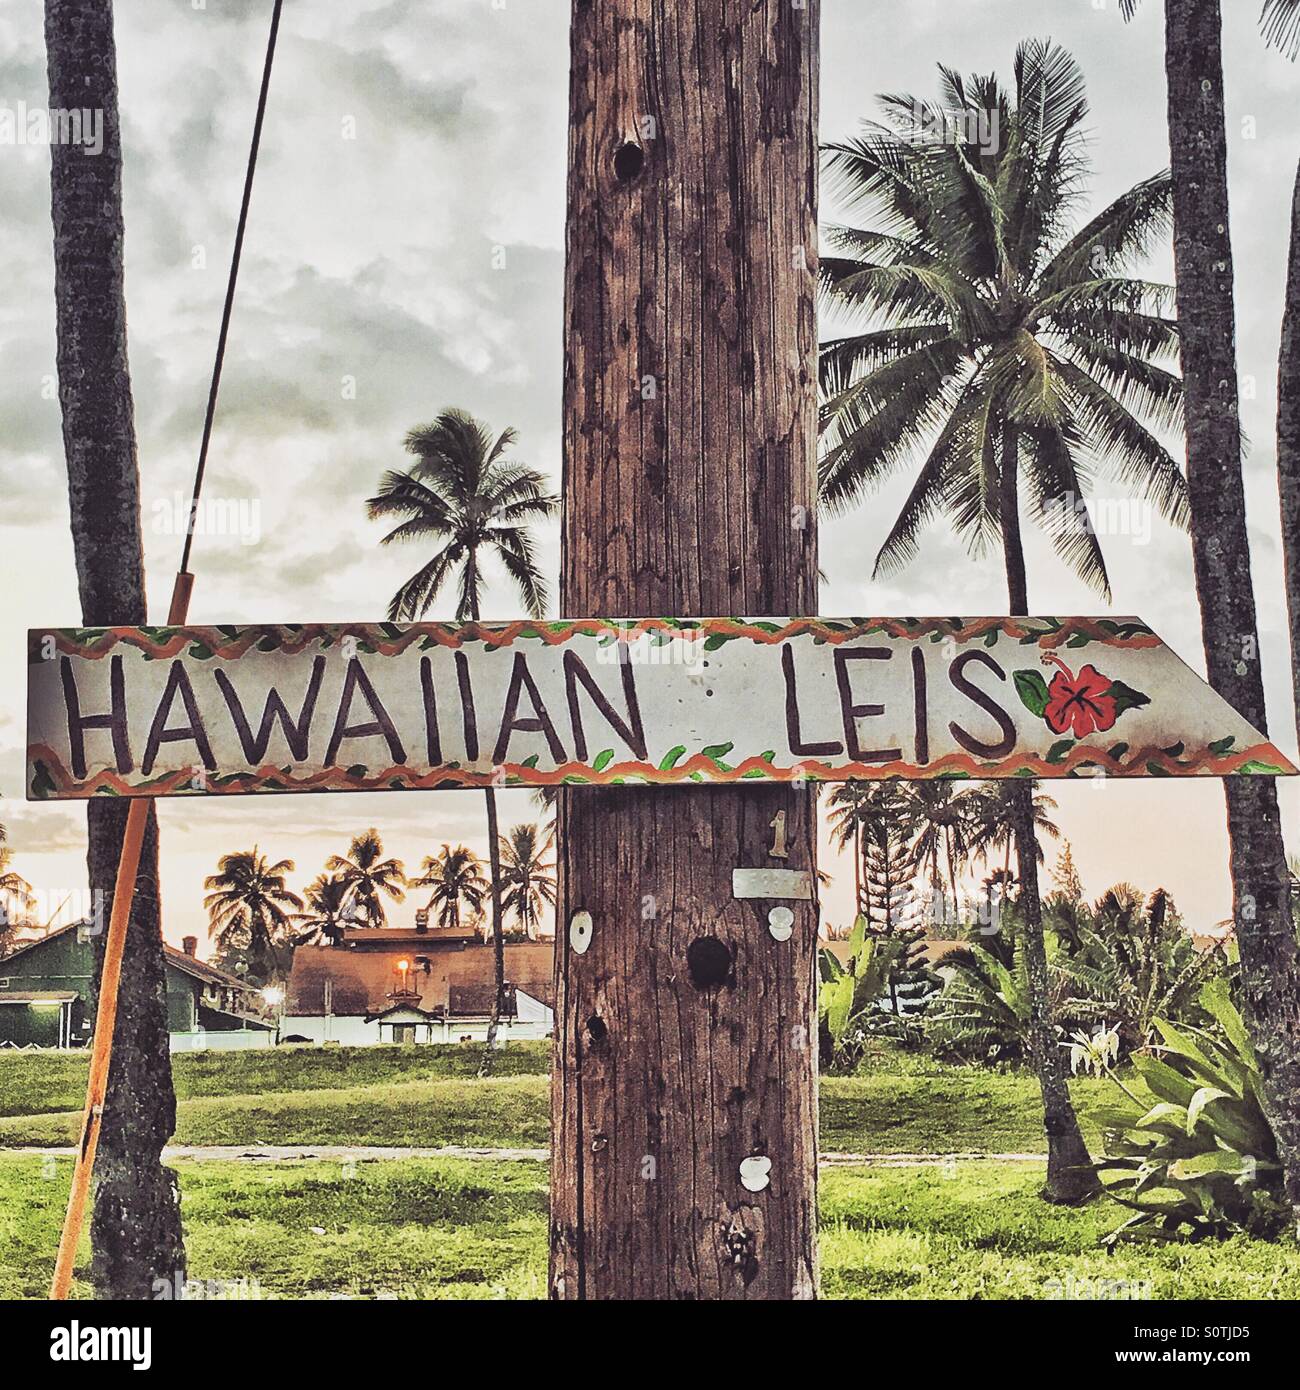 A sign for Hawaiian leis Stock Photo